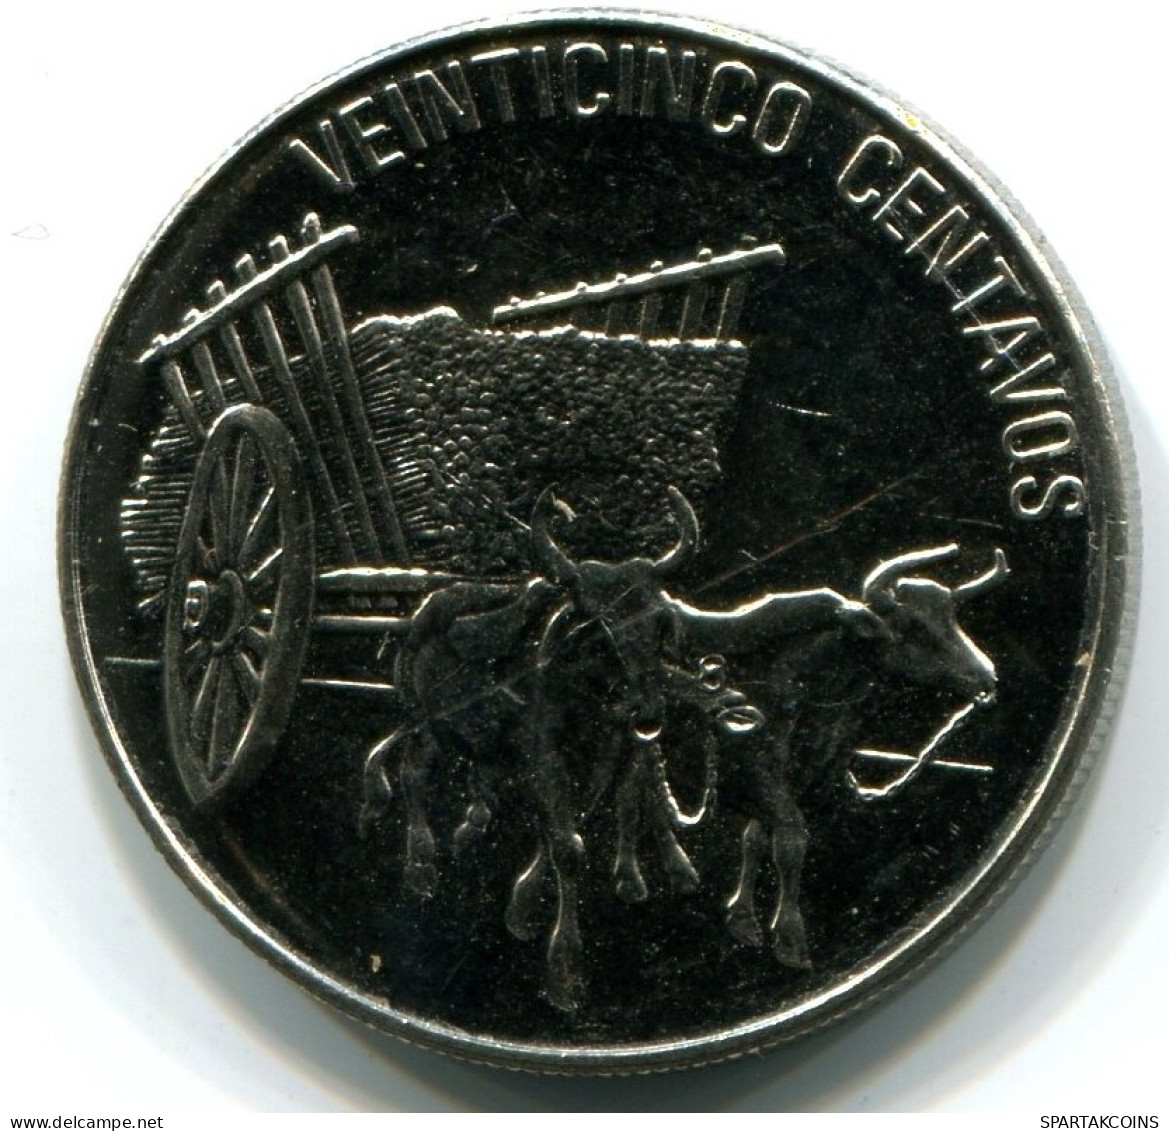 25 CENTAVOS 1991 REPUBLICA DOMINICANA UNC Coin #W11134.U.A - Dominicaine